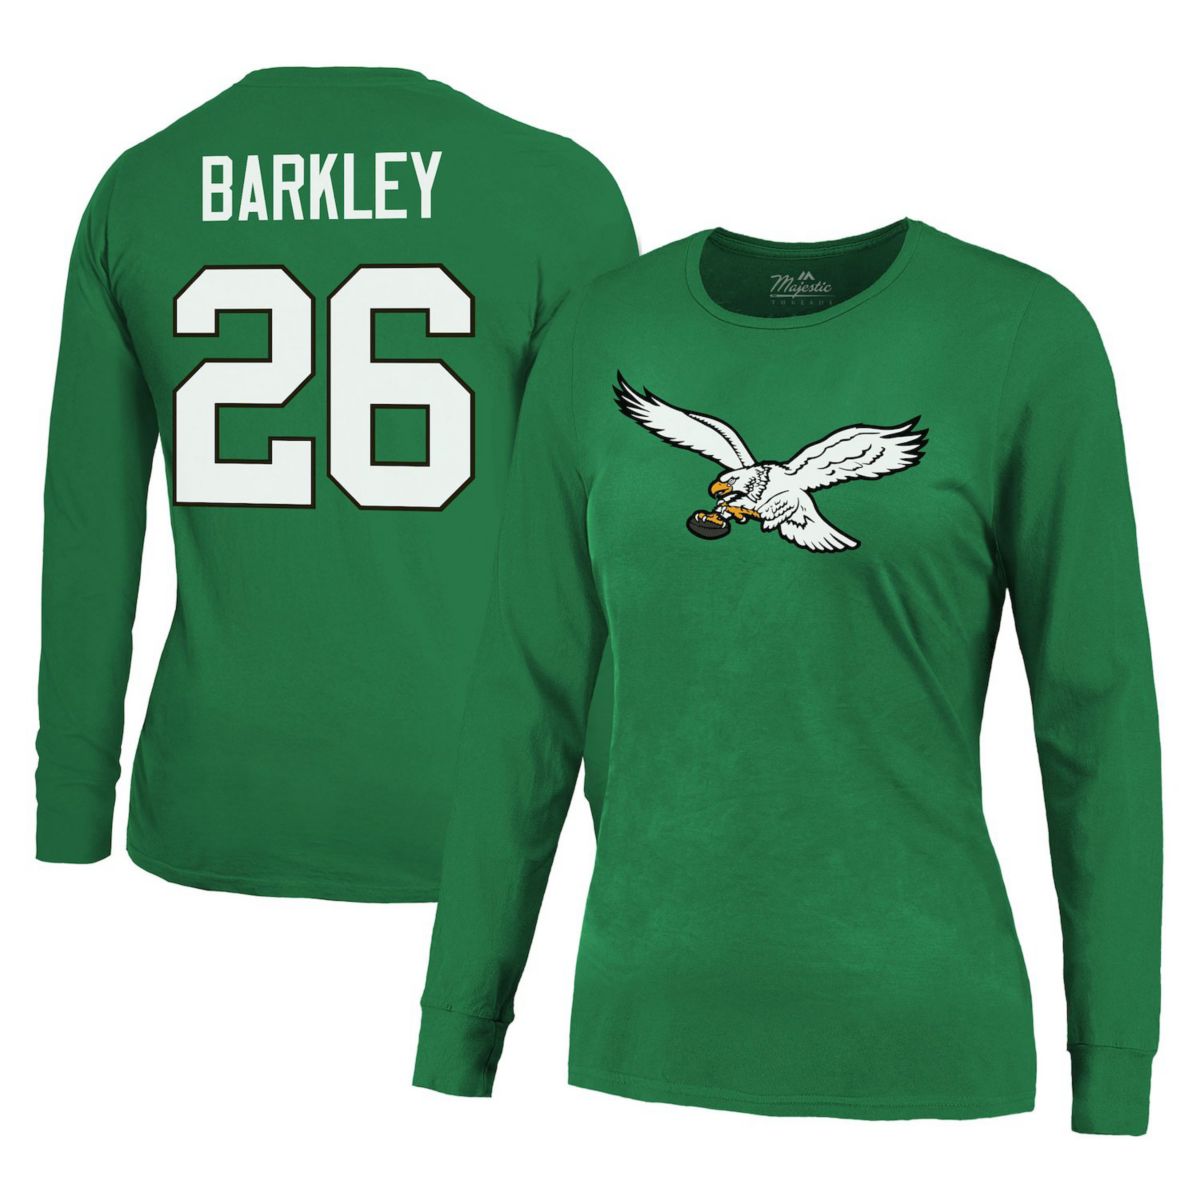 Women's Majestic Threads Saquon Barkley Kelly Green Philadelphia Eagles Name & Number Long Sleeve T-Shirt Majestic Threads